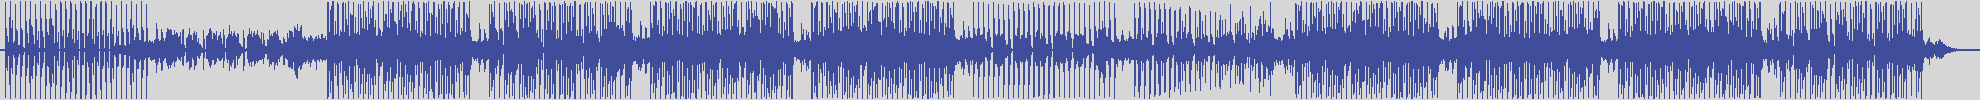 nf_boyz_records [NFY076] Philip Rouge - Mental Testimony [Rhythms Mix] audio wave form